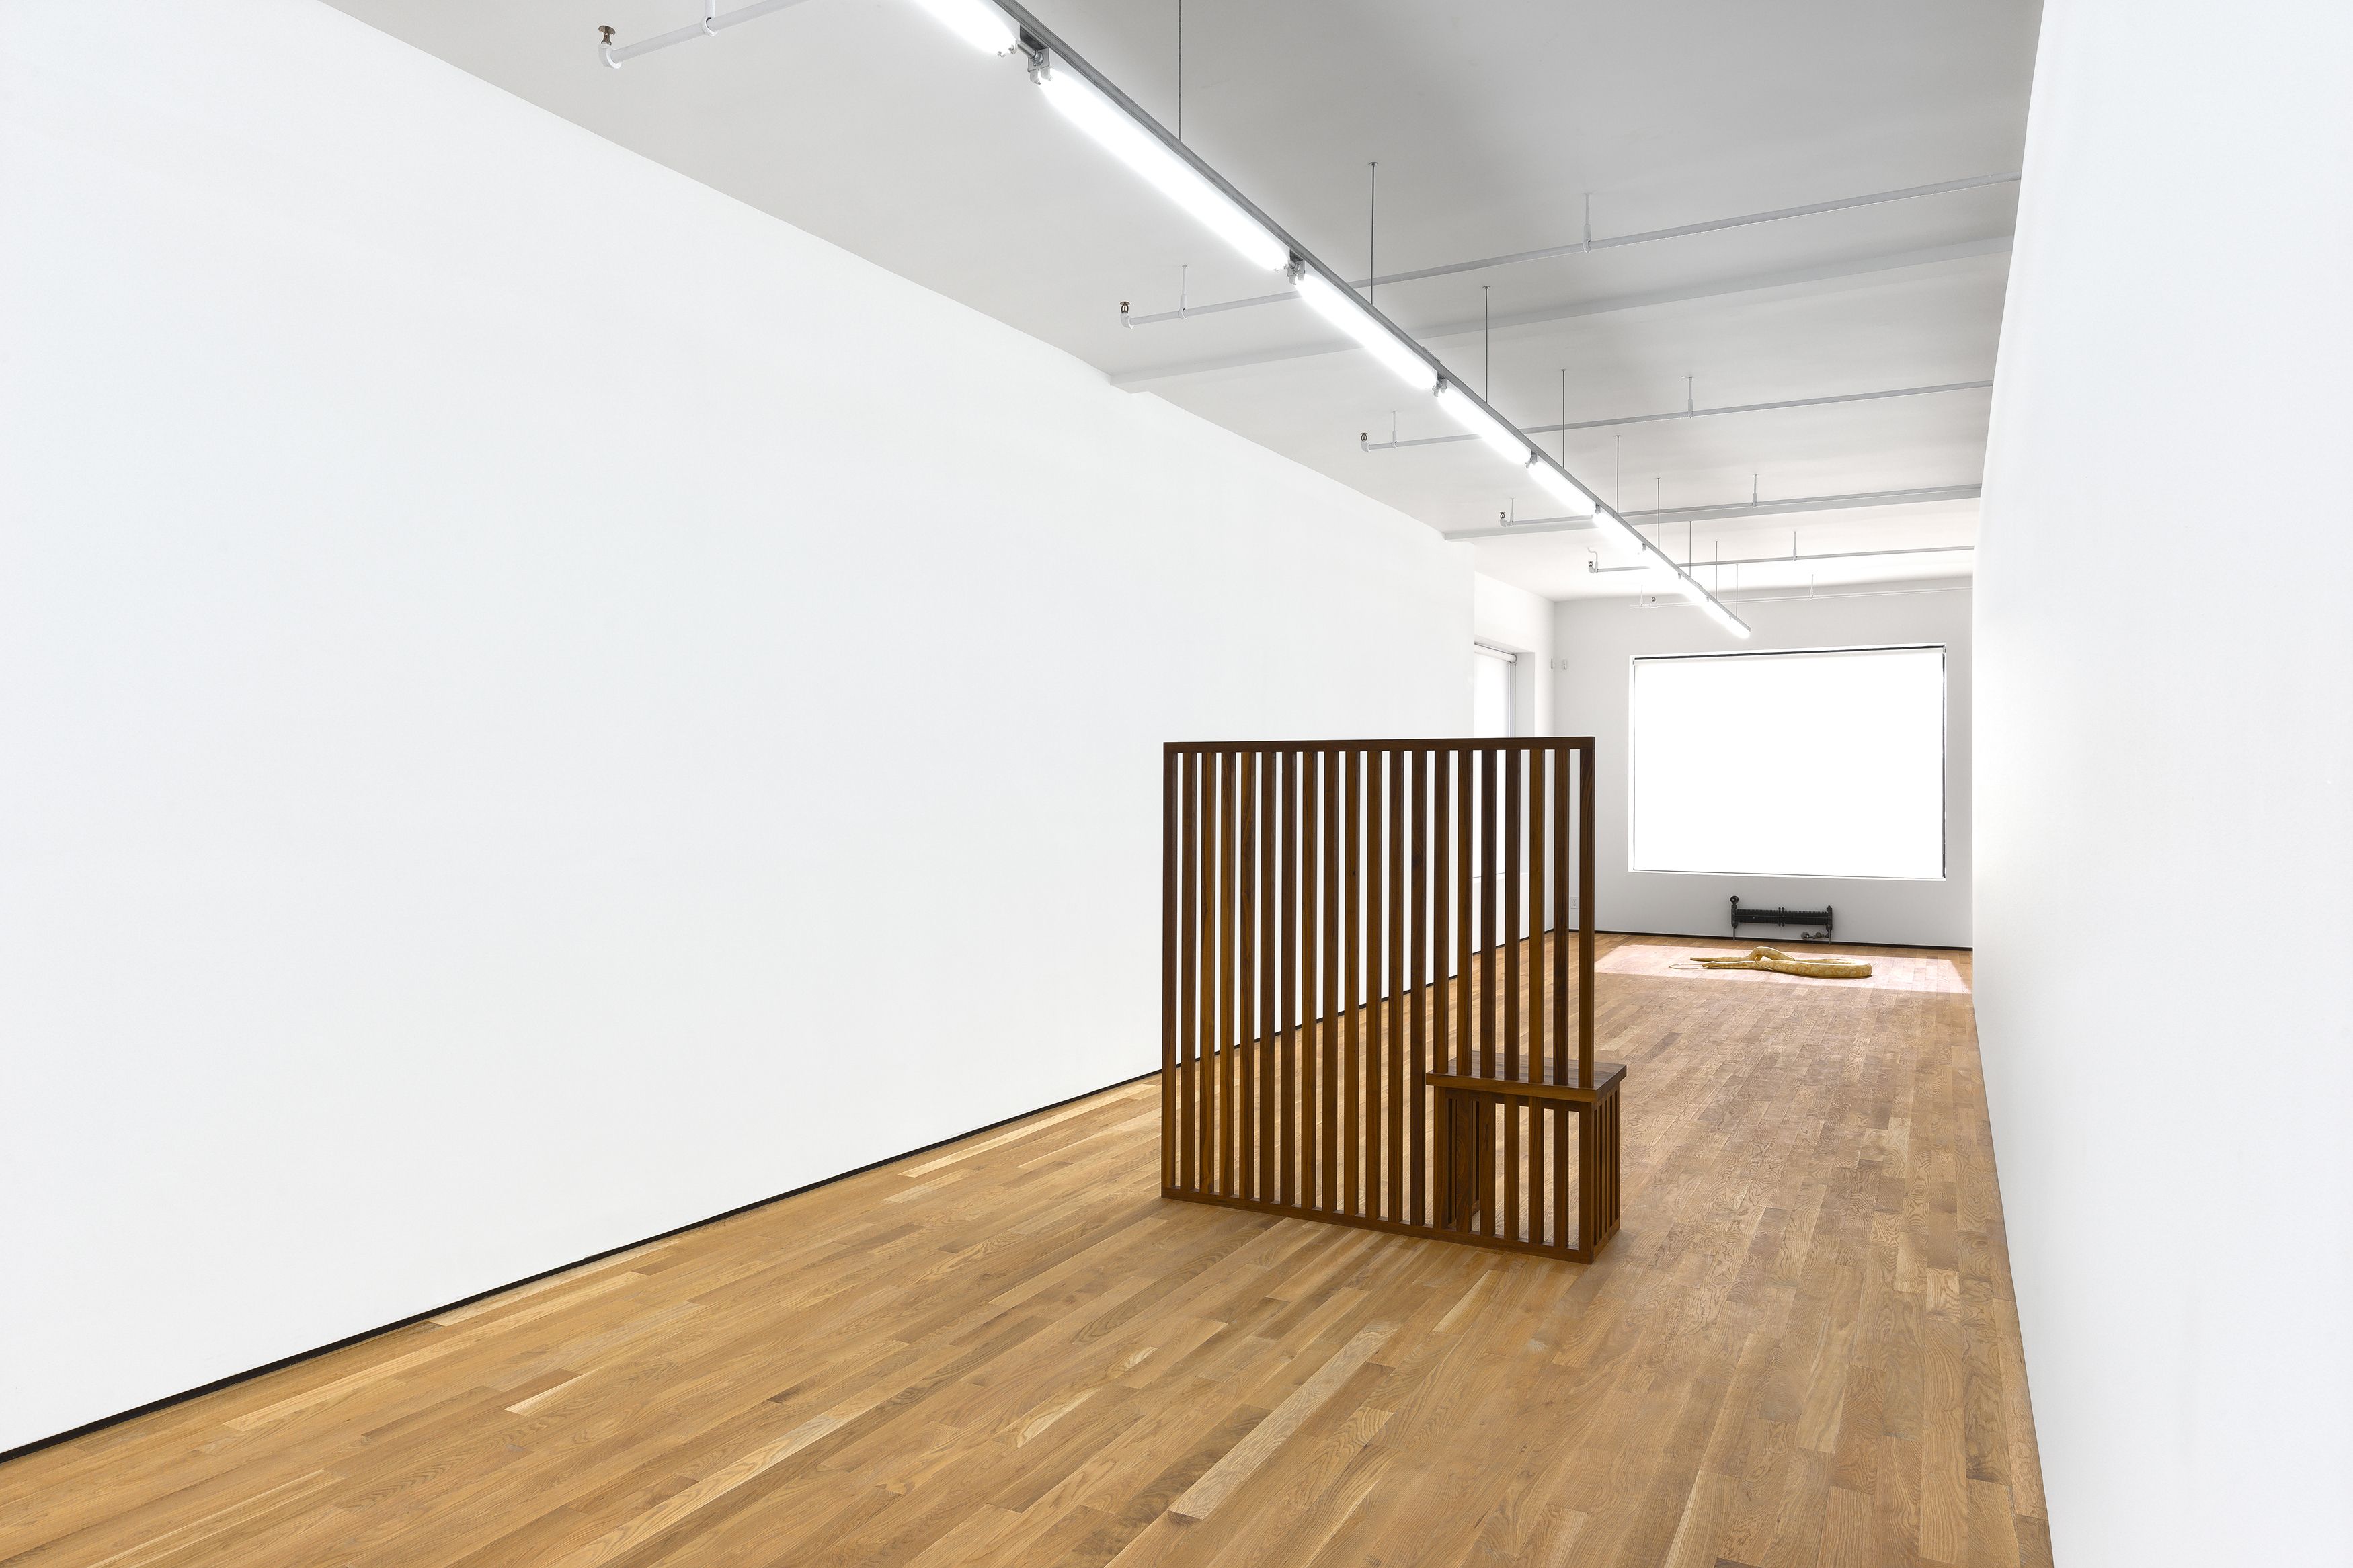 Stephen Lichty, 2016, installation view, Foxy Production, New York